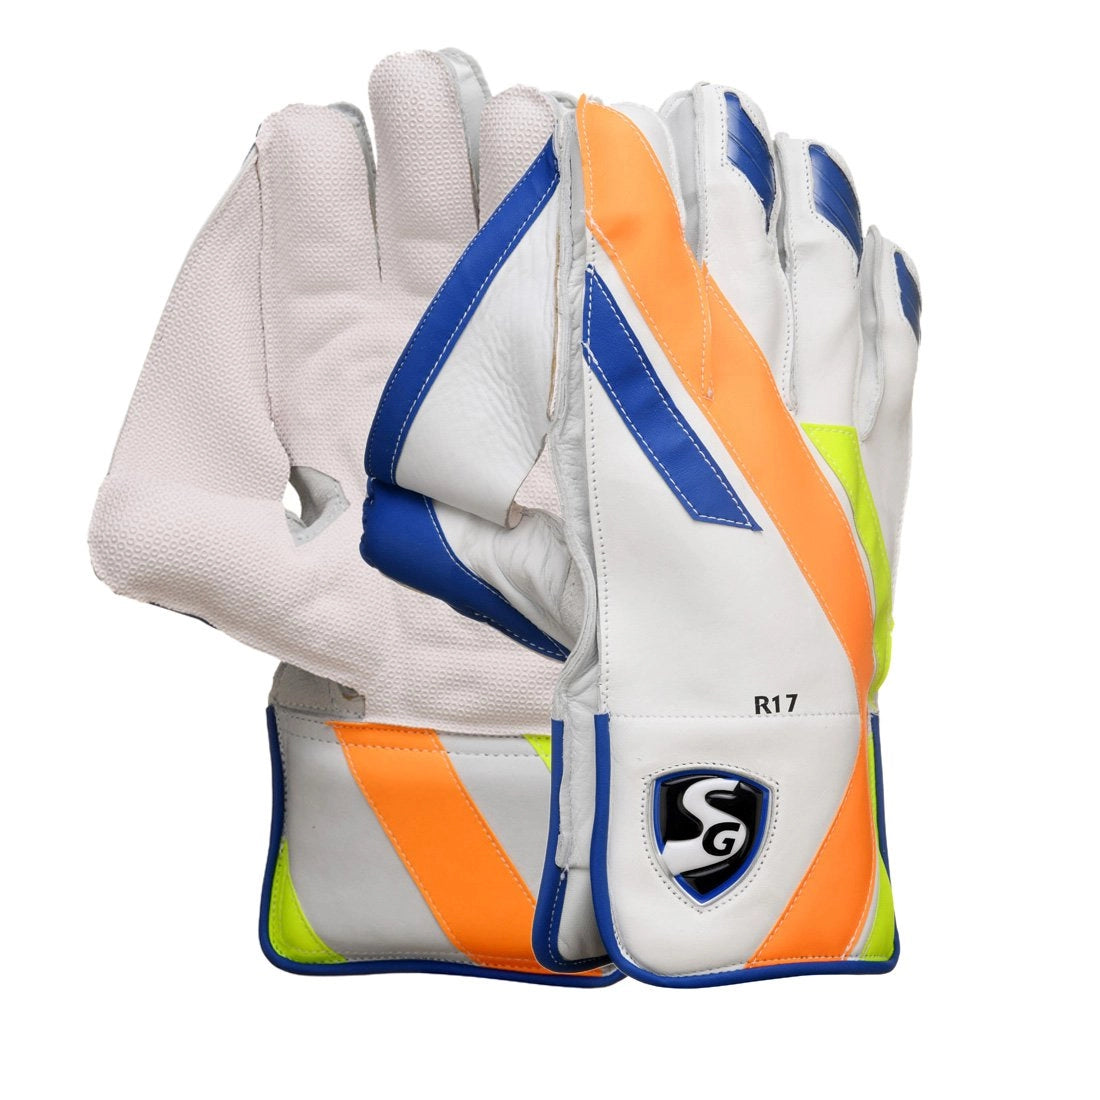 SG R 17 Wicket Keeping Glove